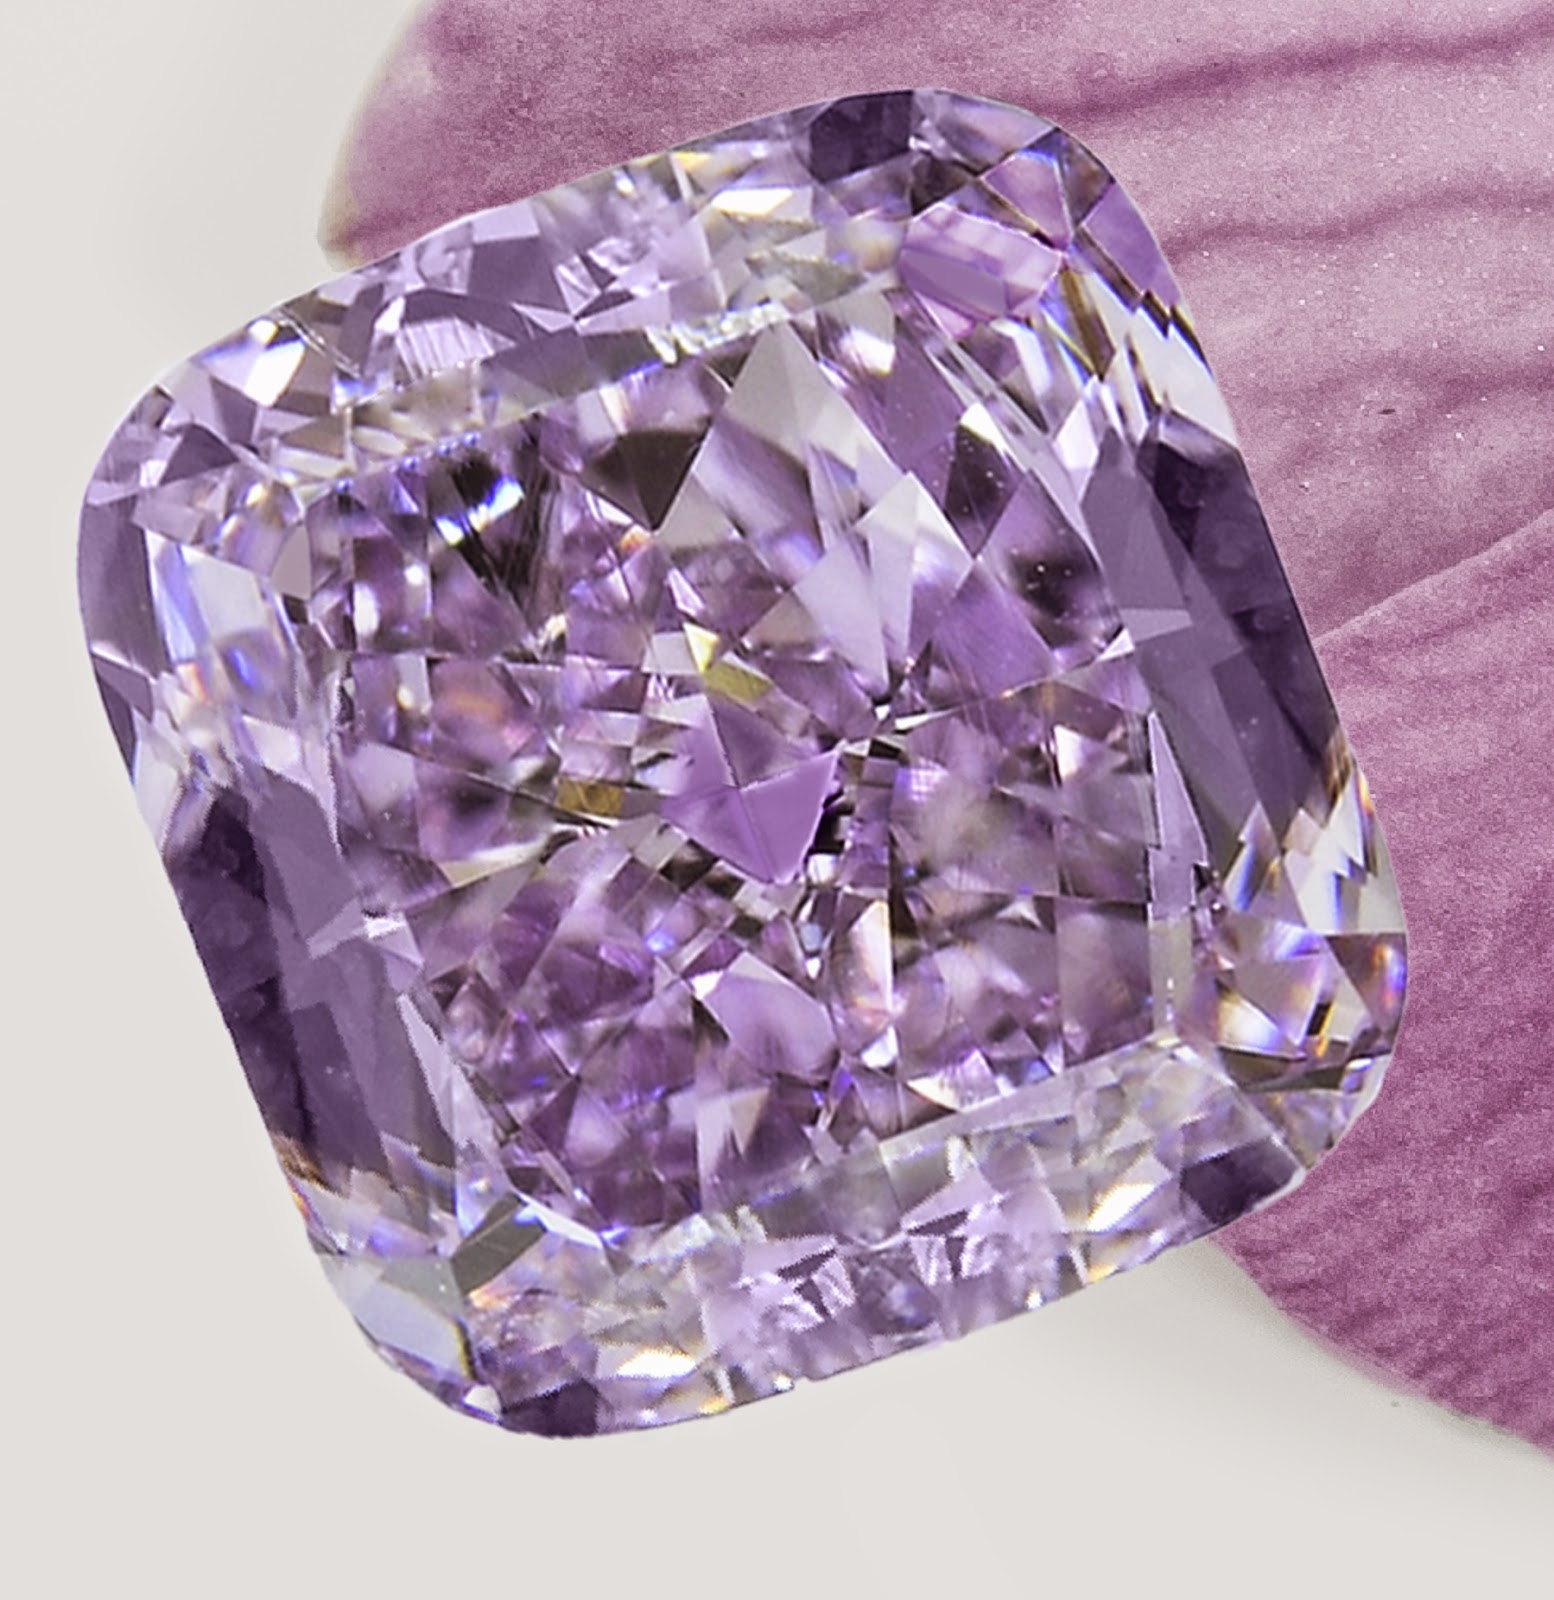 Sarah Brightman Unisex Circle Key Ring - Crystal